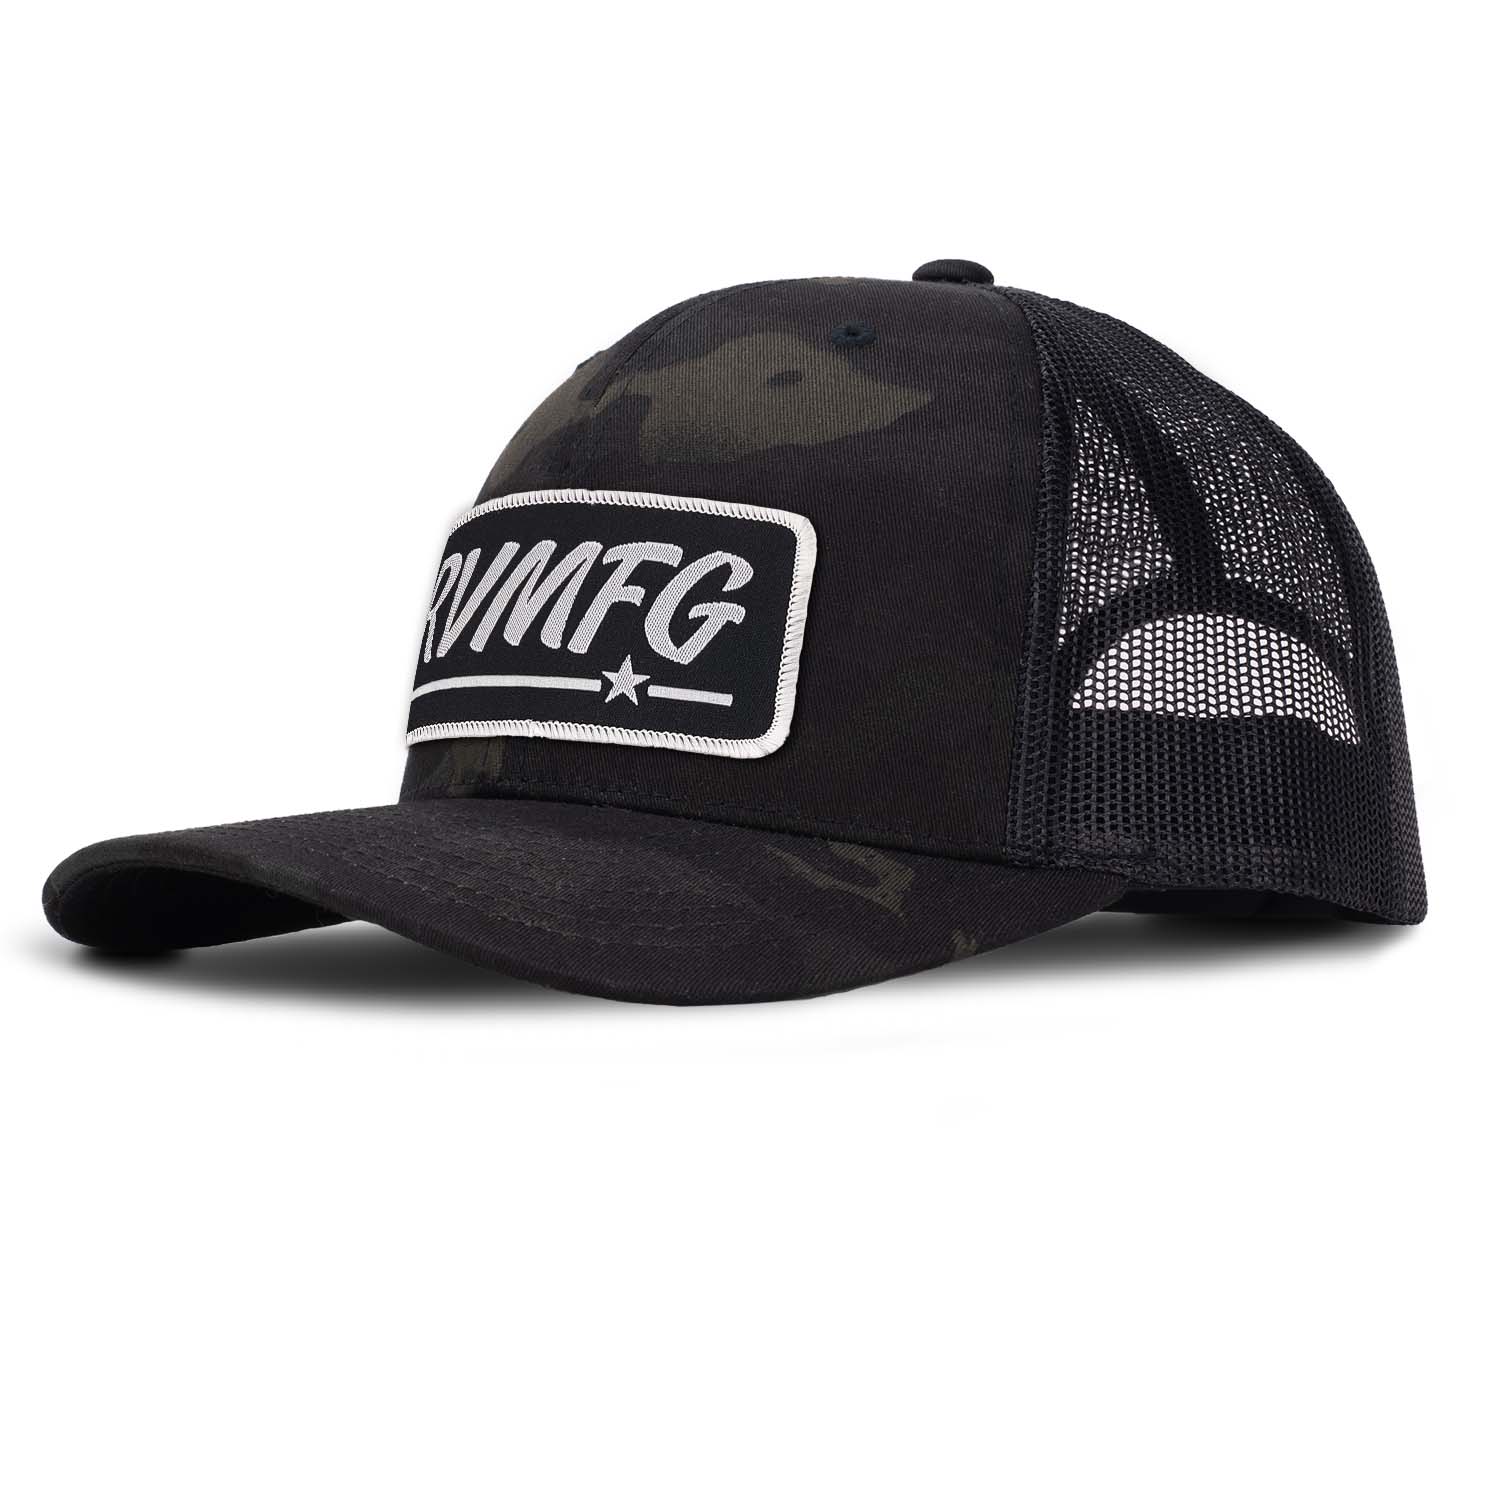 Shop | RVMFG Camo Classic Trucker Hat | Revolution Mfg Multicam Black | Black / Black Patch